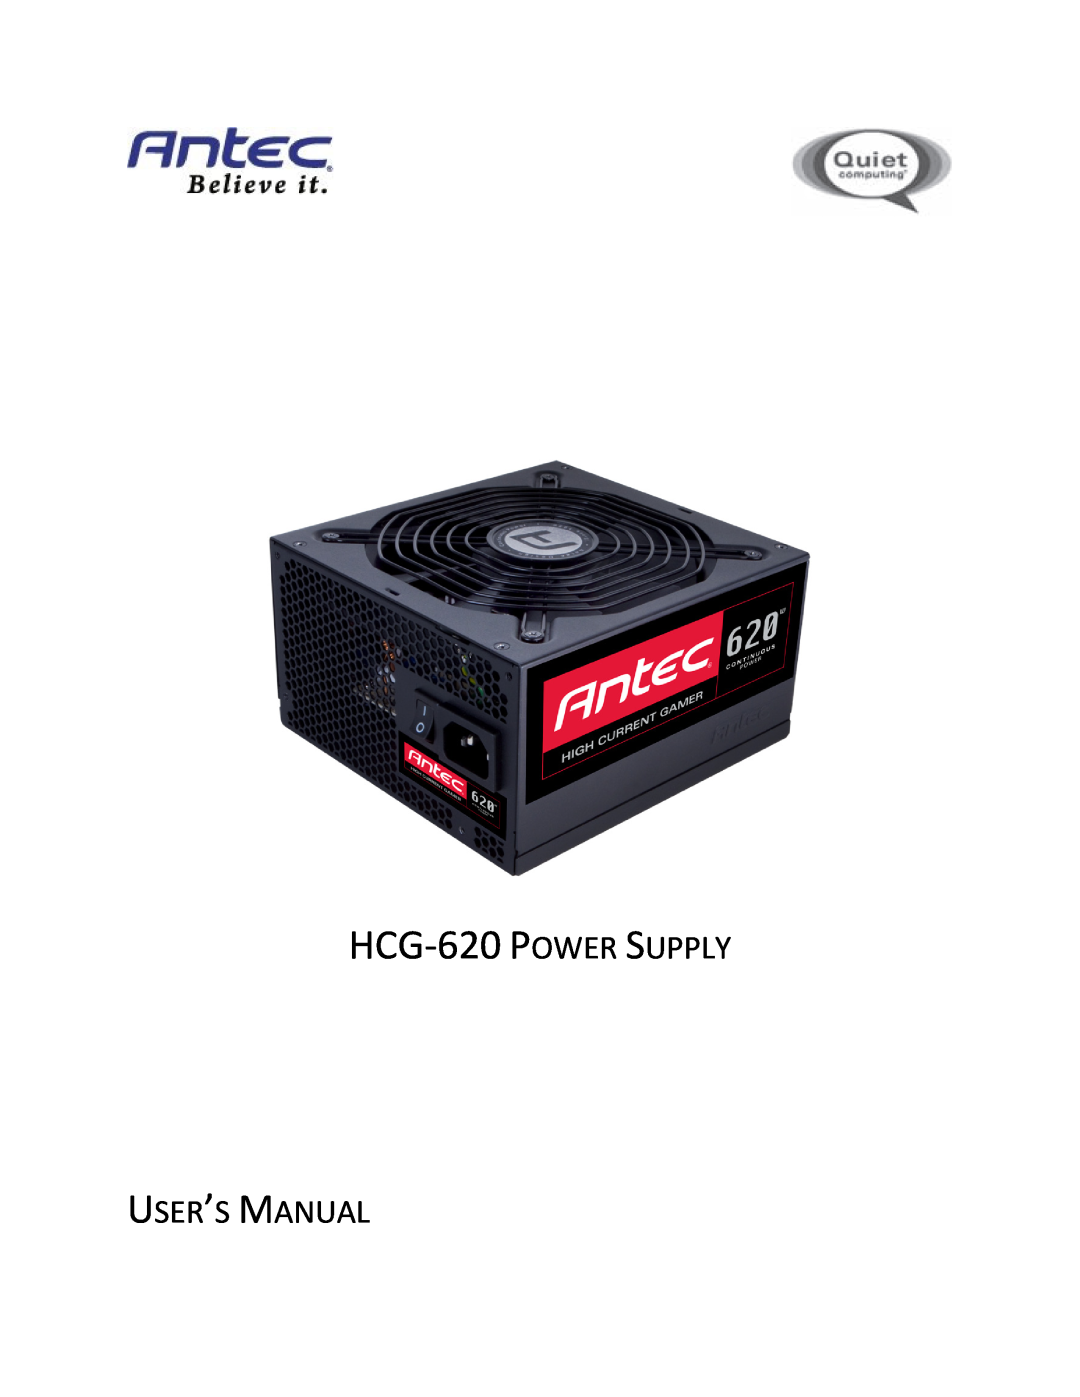 Antec user manual HCG-620 POWER SUPPLY, User’S Manual 